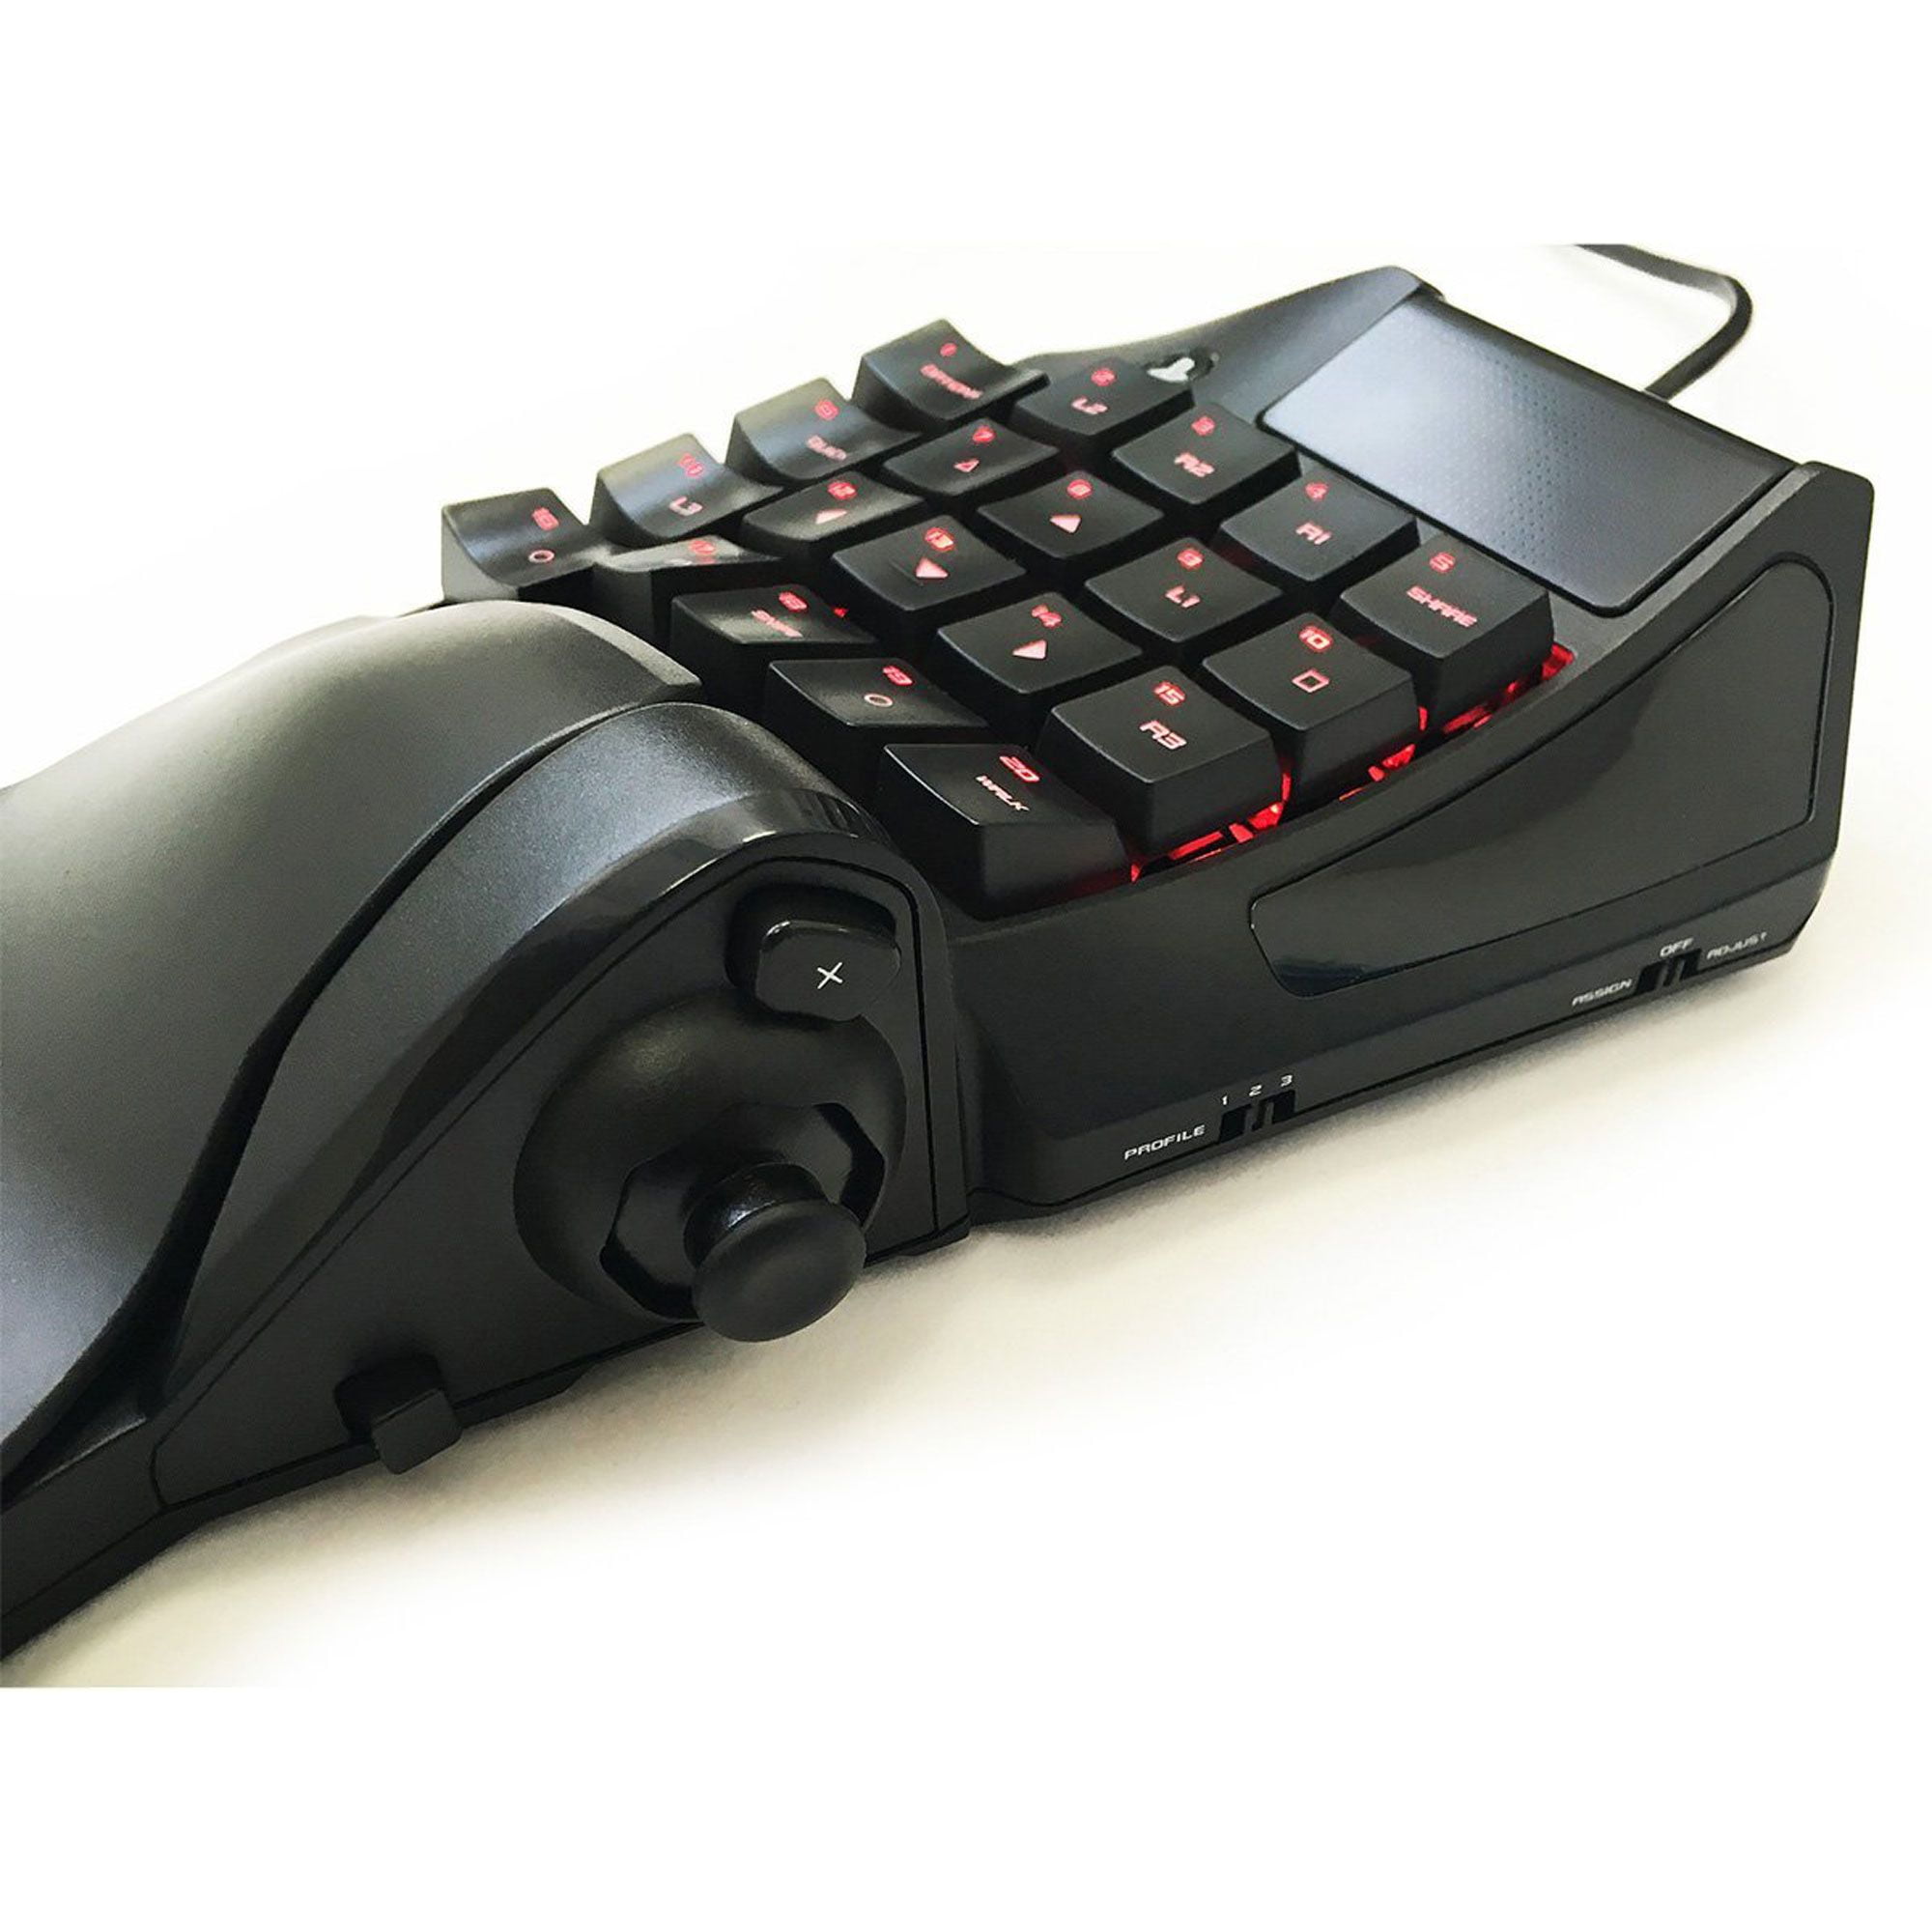 HORI Tactical Assault Commander Pro KeyPad and Mouse For PS4/PS3 FPS Games  - Walmart.com